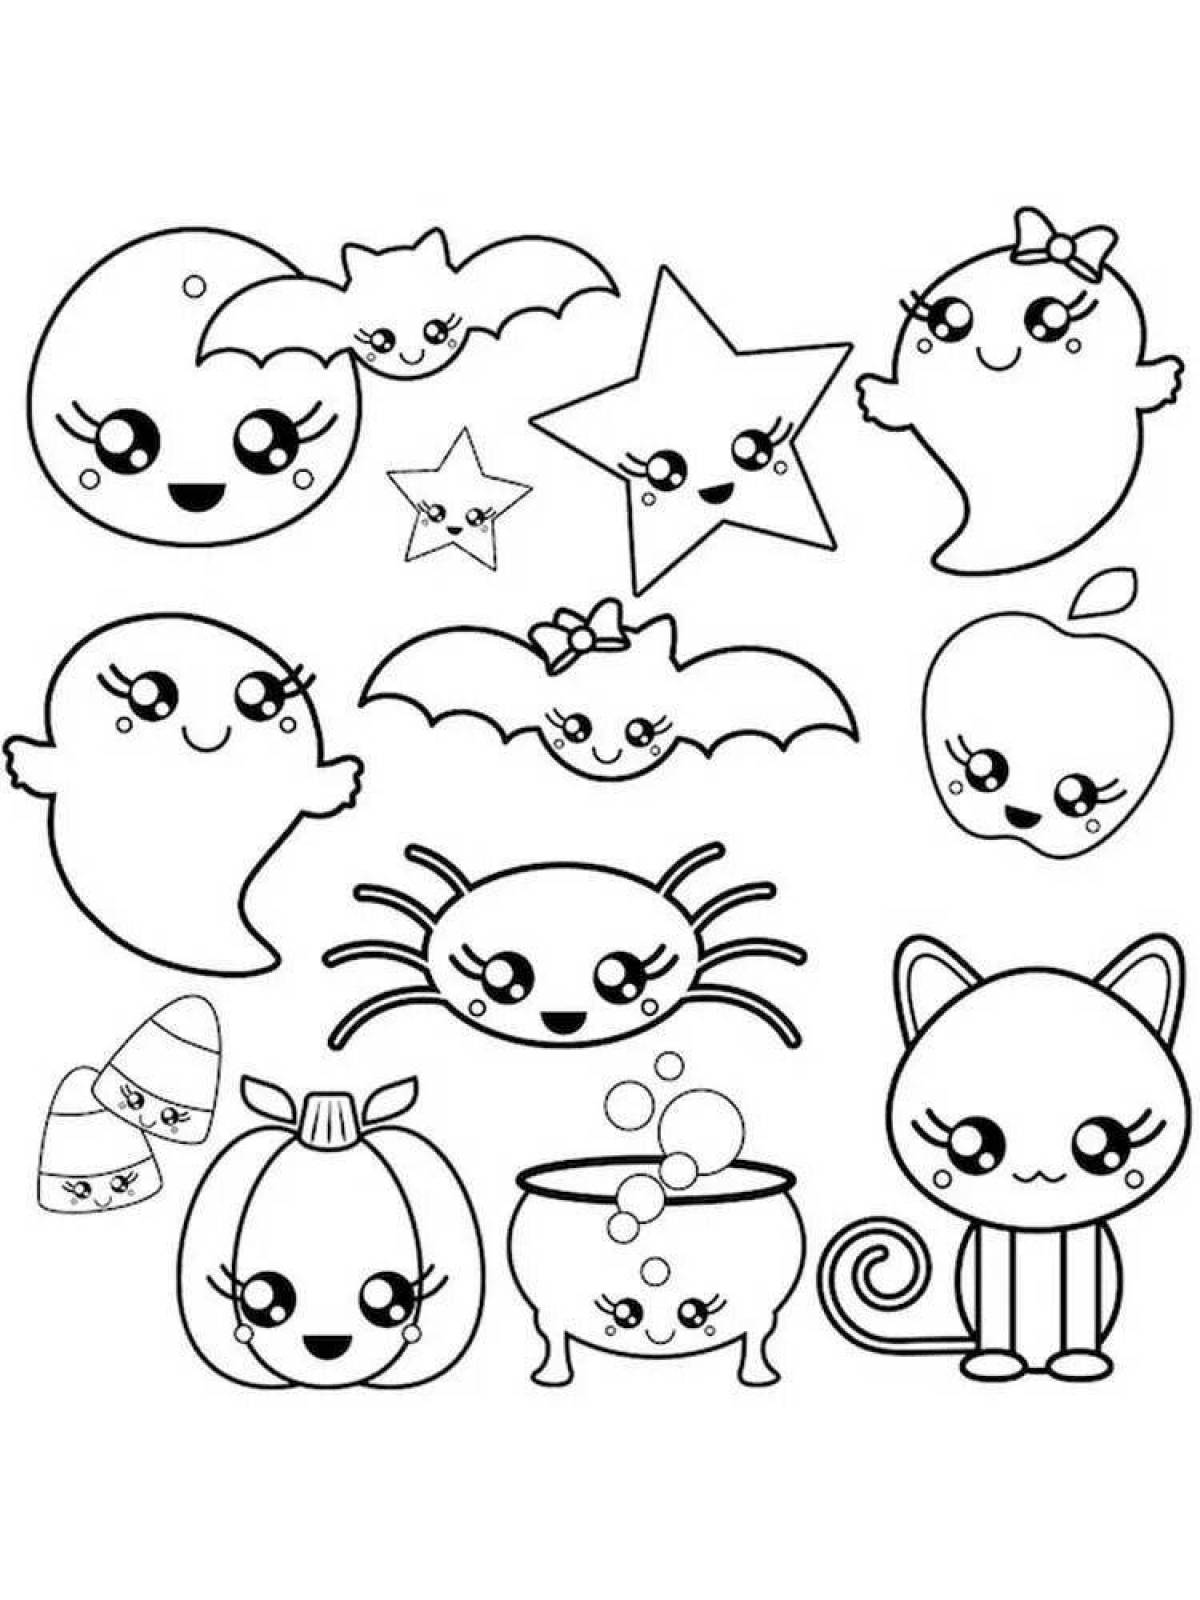 Раскраска snuggly kawaii cats